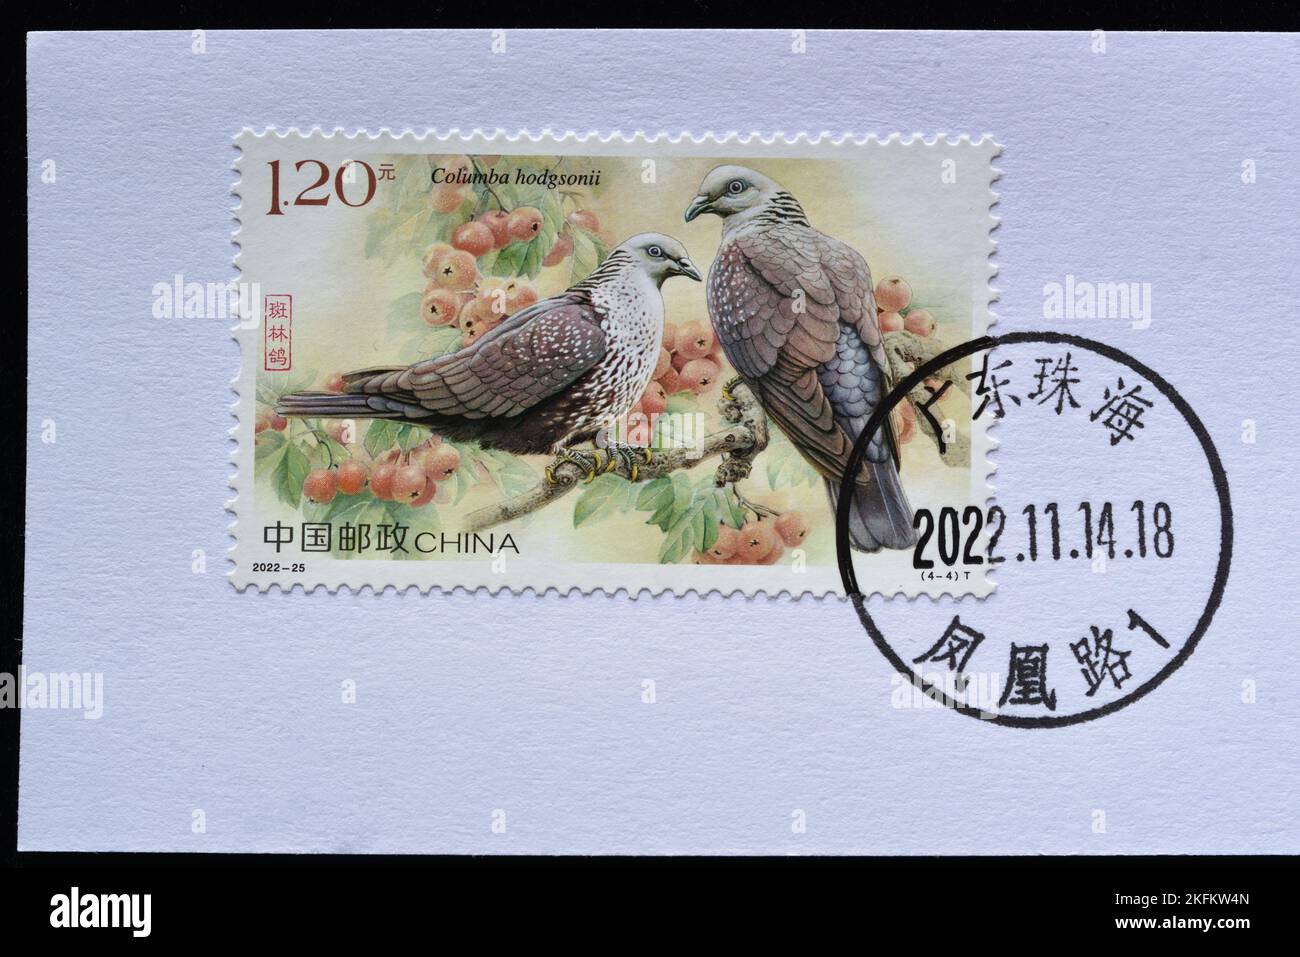 CHINA - CIRCA 2022: Un sello impreso en China muestra 2022-25 Pigeon Columba hodgsonii, circa 2022 Foto de stock